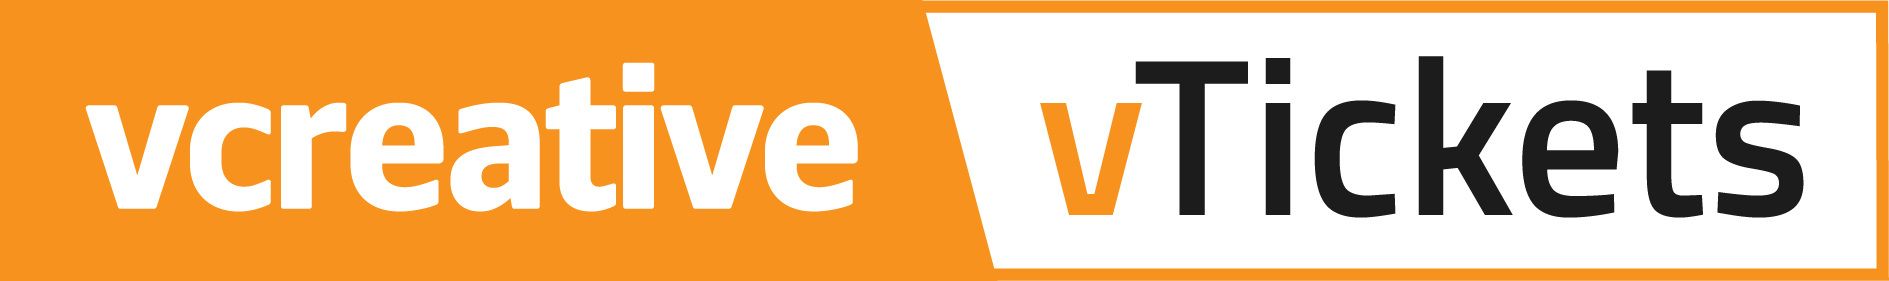 vcreative-vtickets-logo-orange